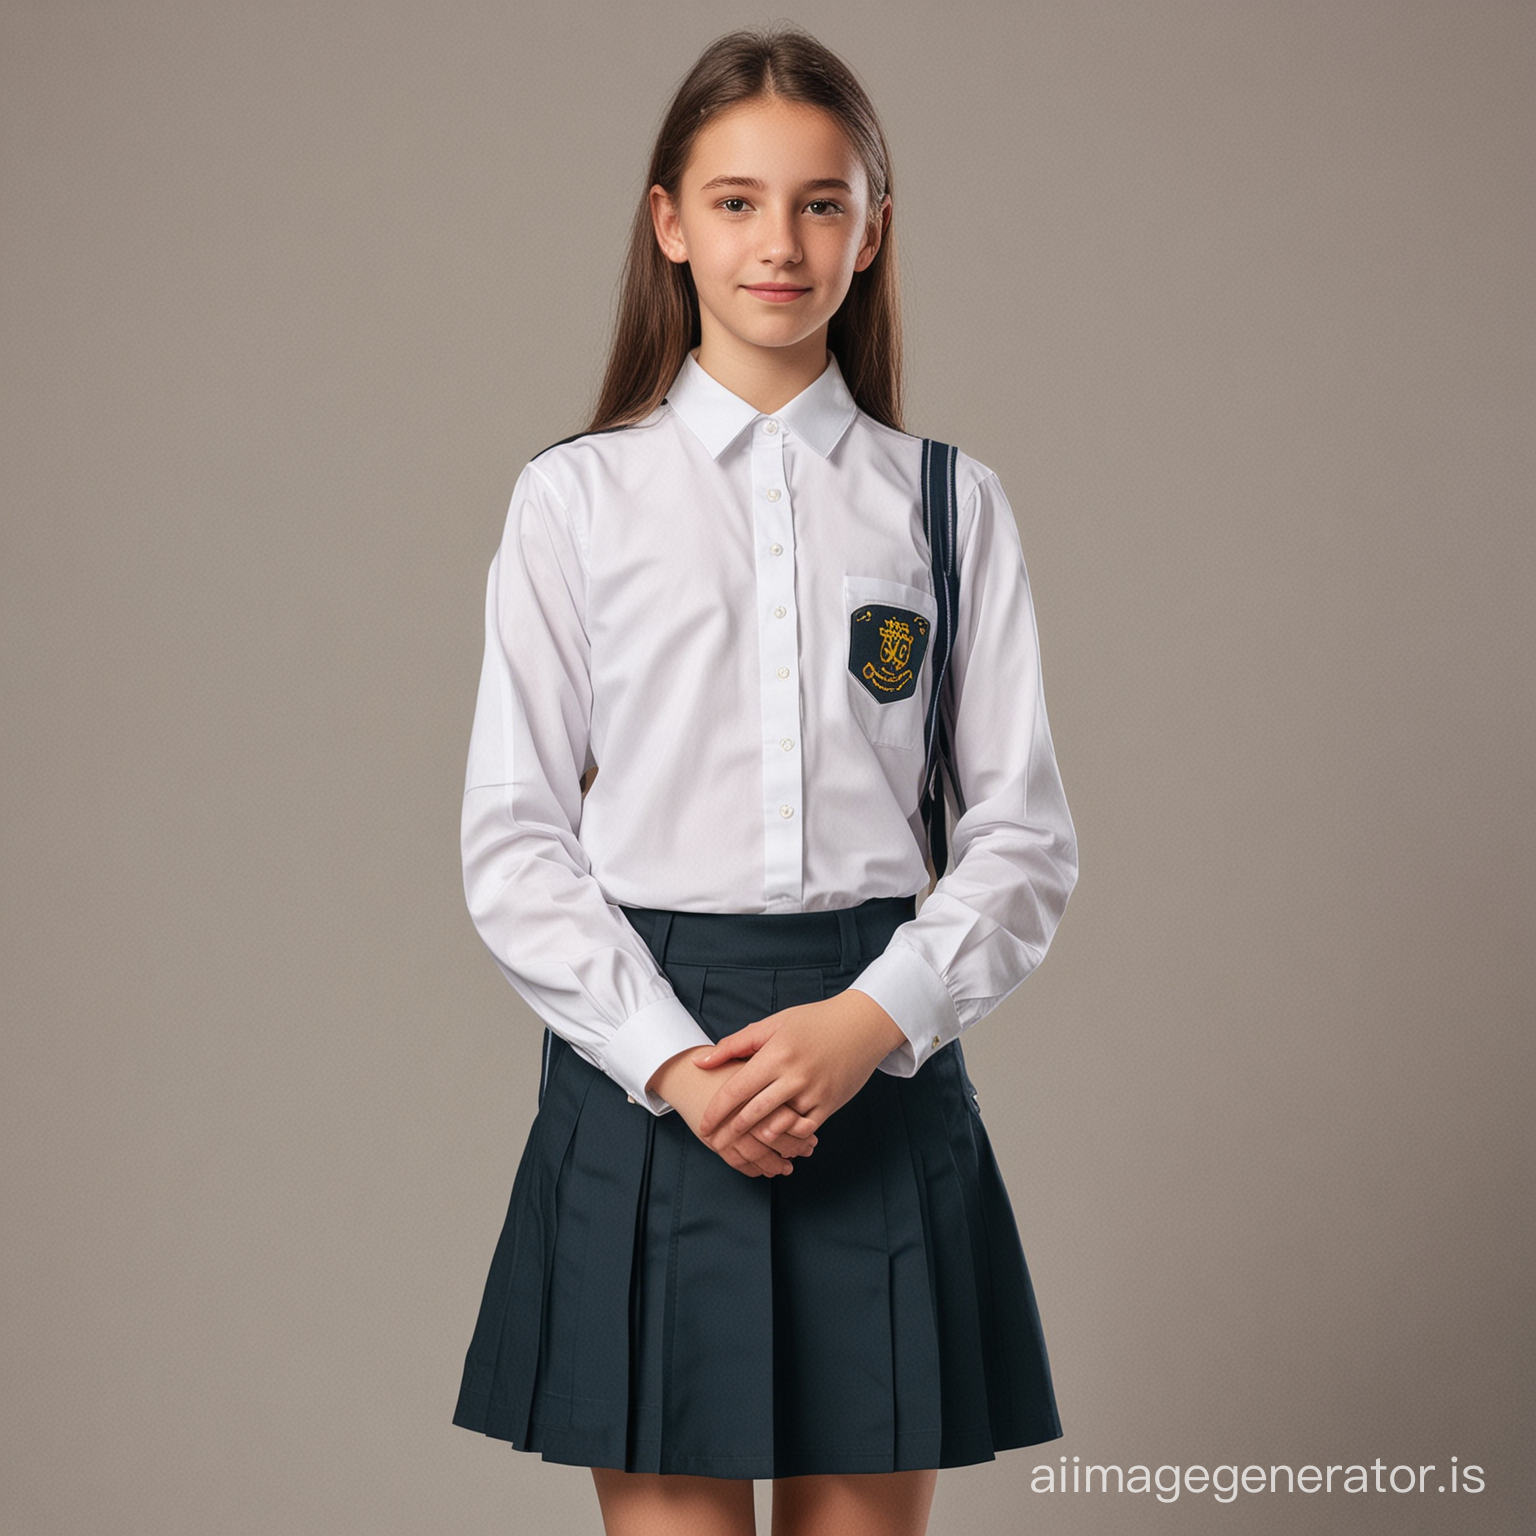 13 years old Girl wearing a school uniform